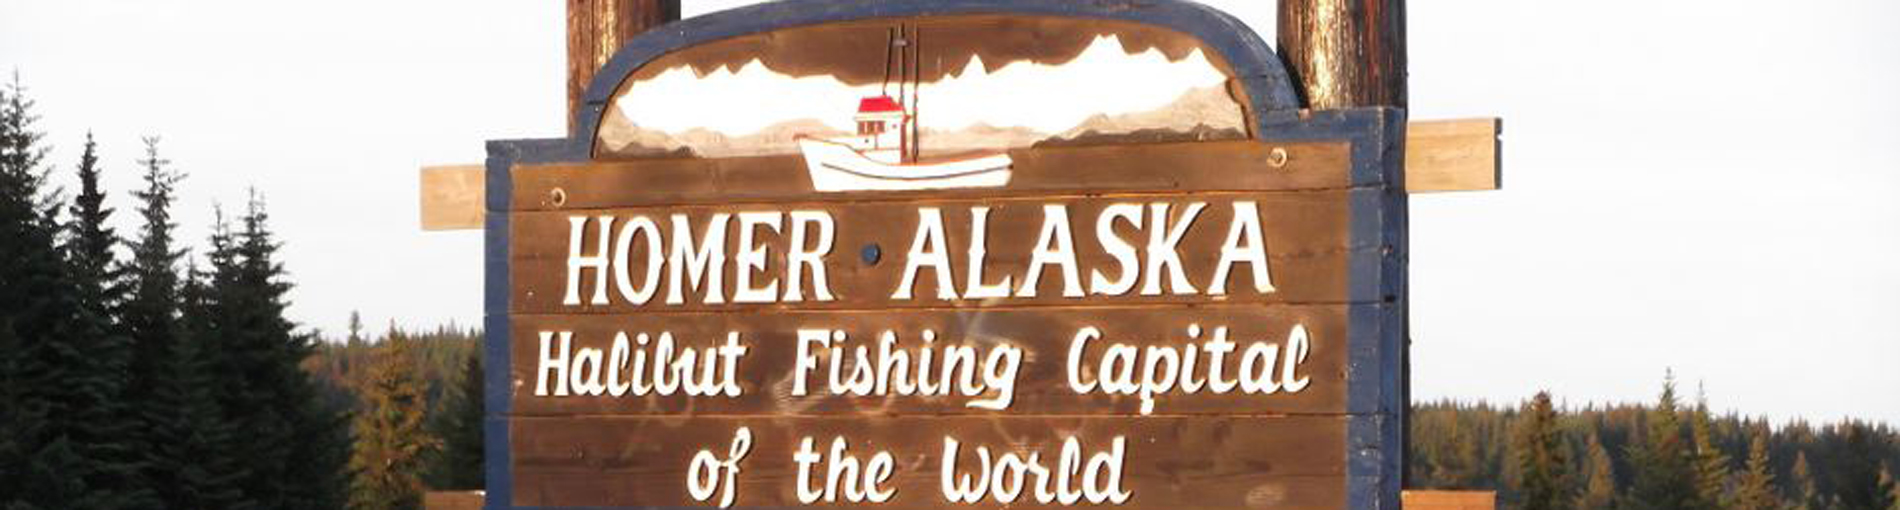 Hotel Reviews for Homer, Alaska